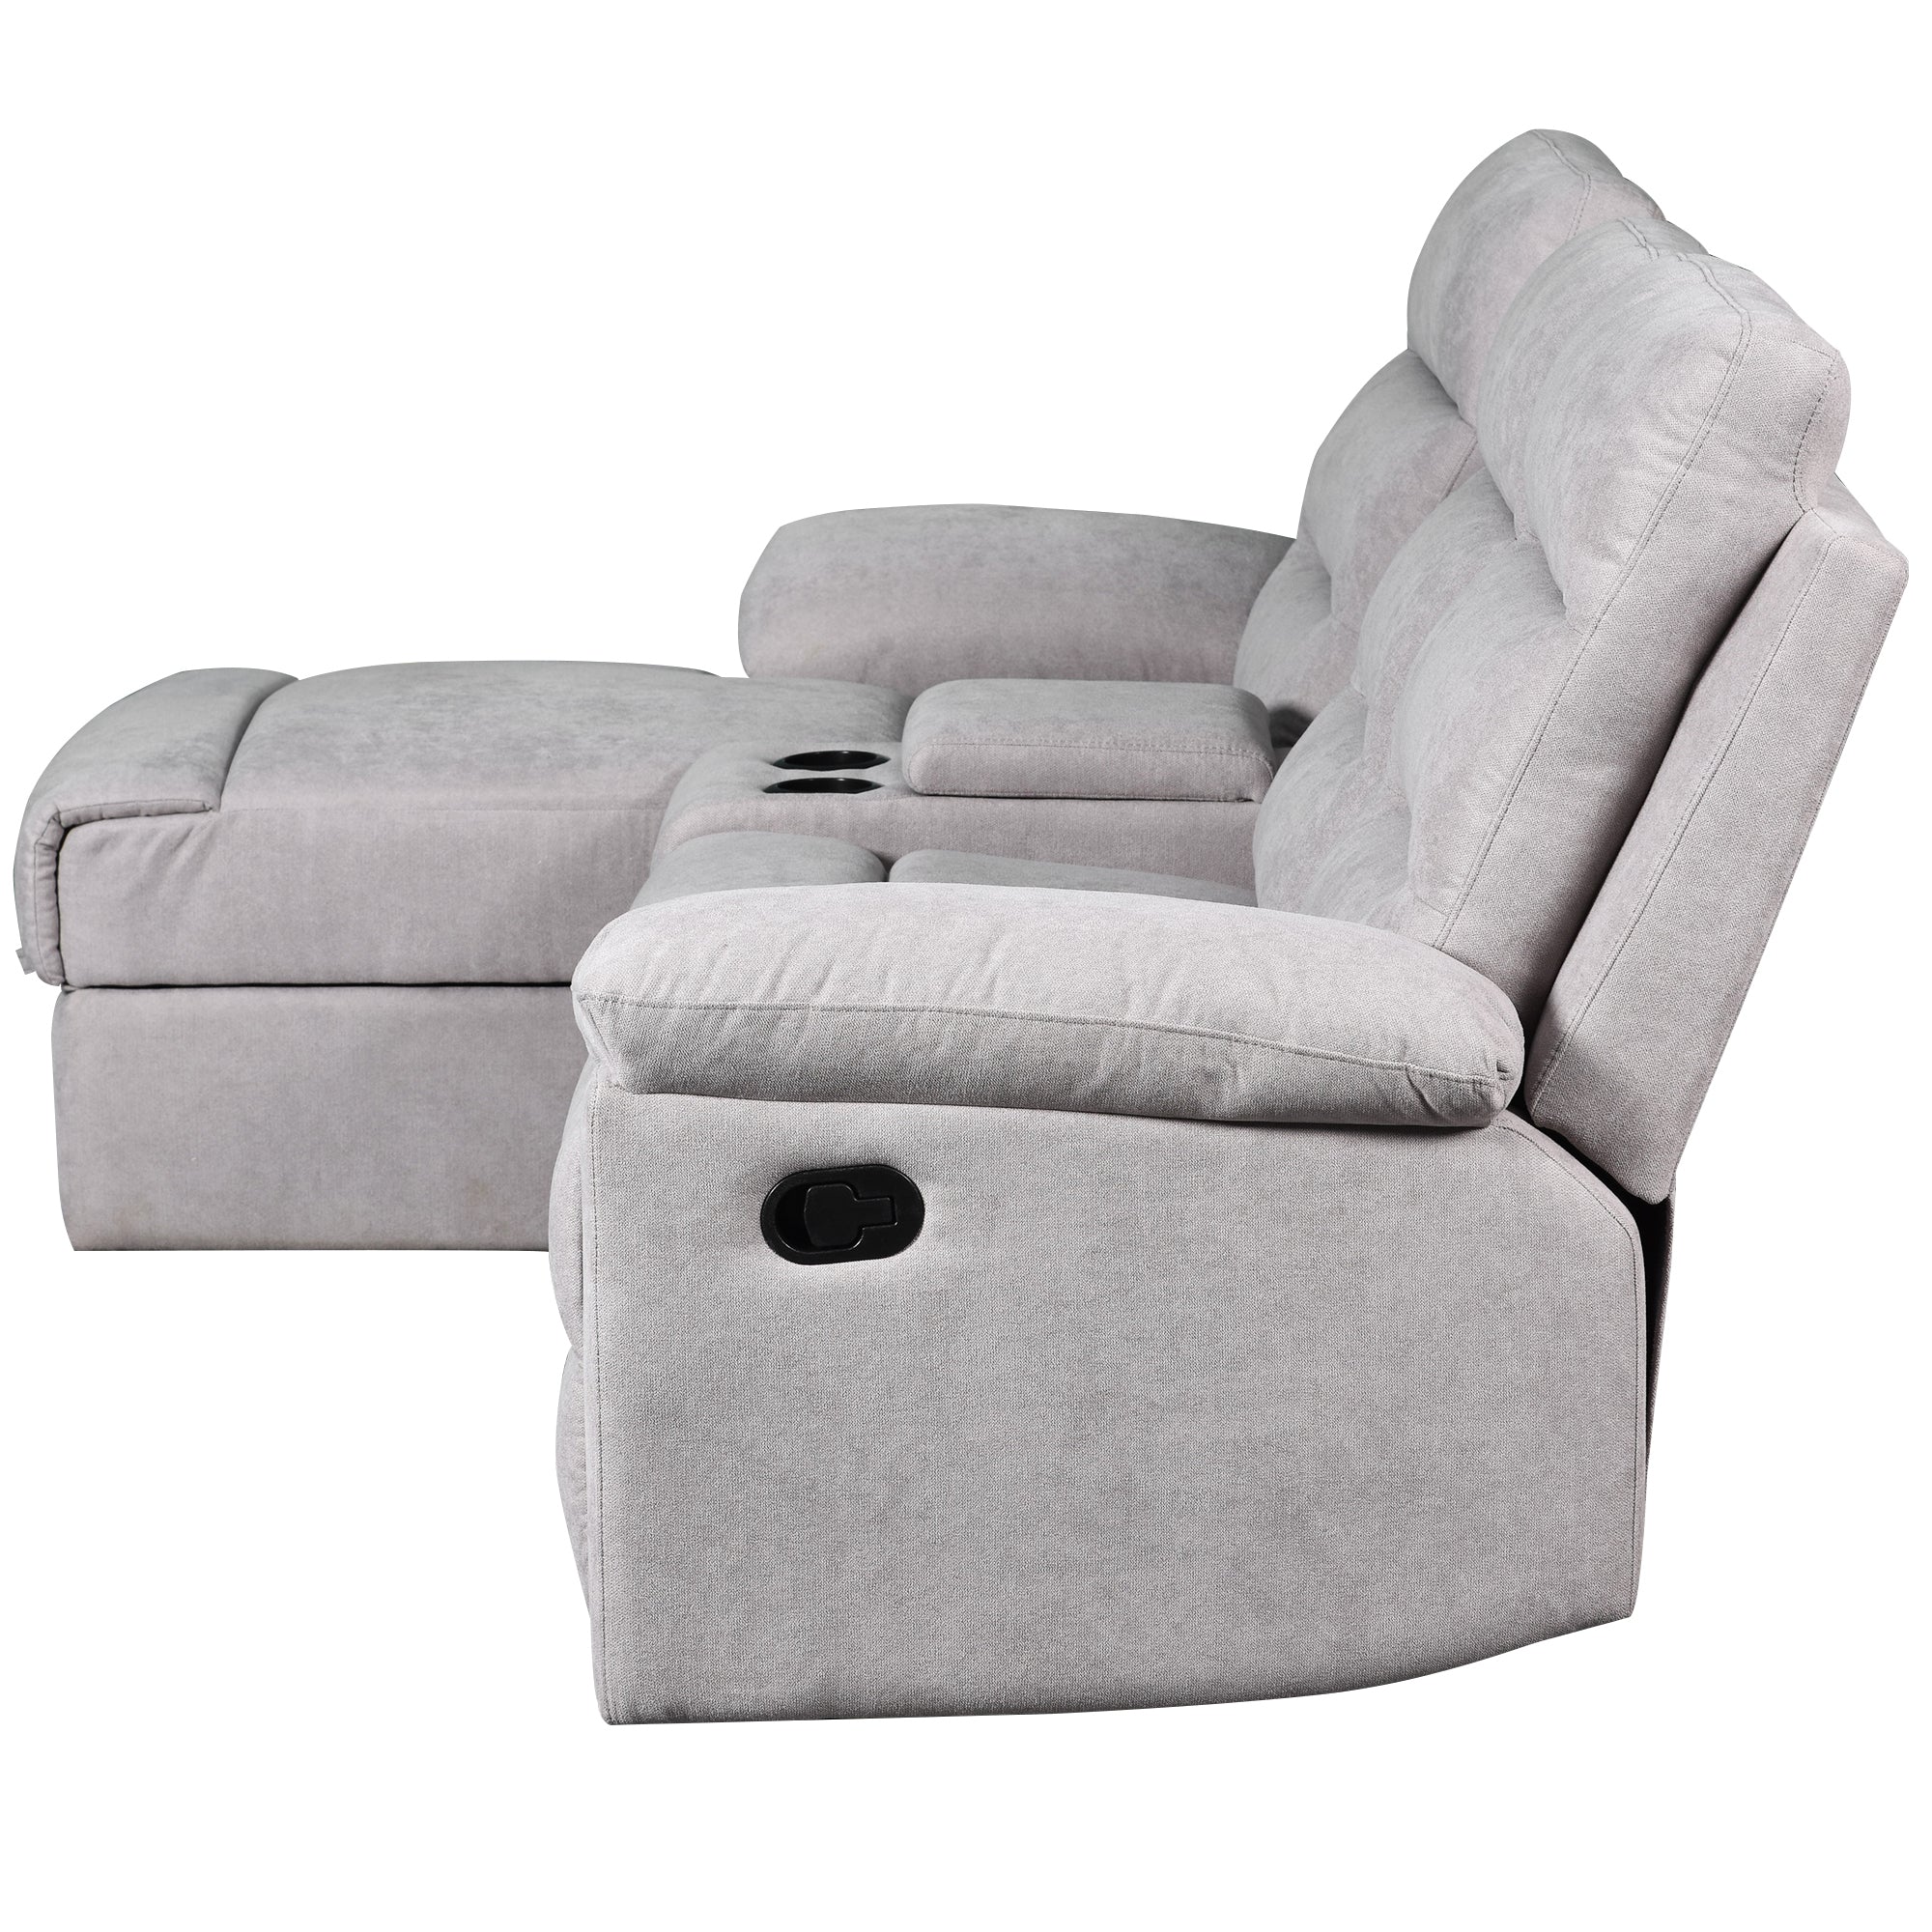 U_STYLE Modern Upholstered L-Shaped Reclining Modular Sofa